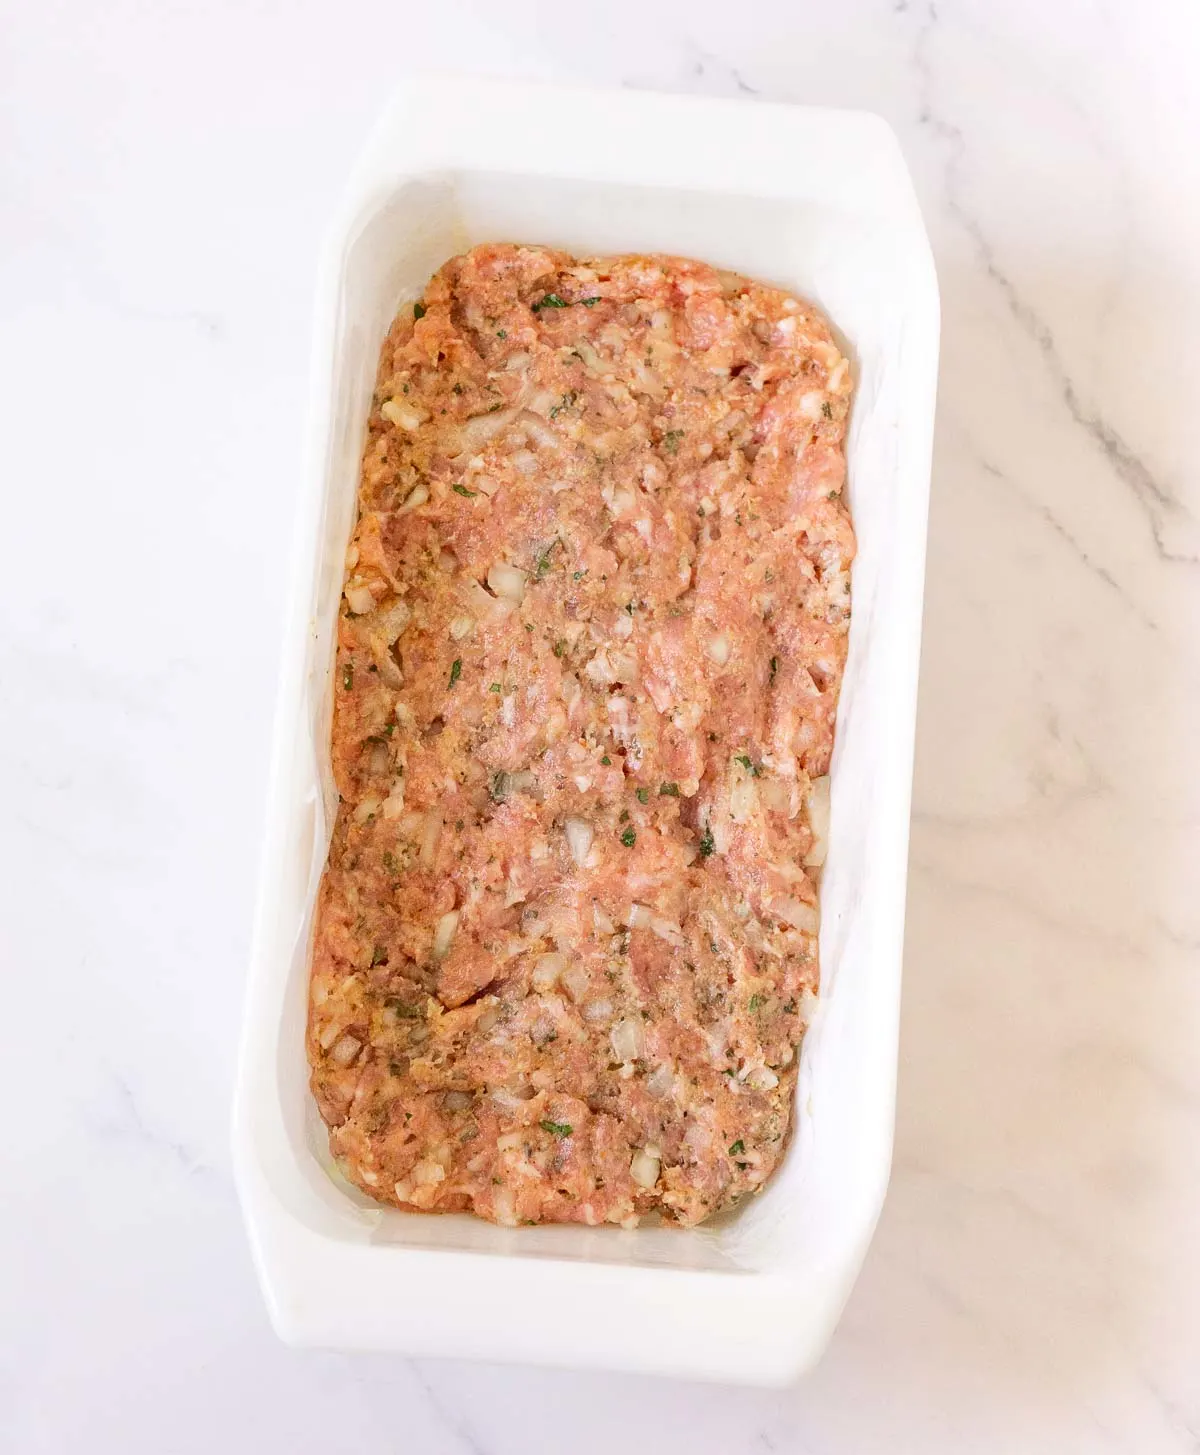 Ground pork meatloaf mixture pressed into a loaf pan